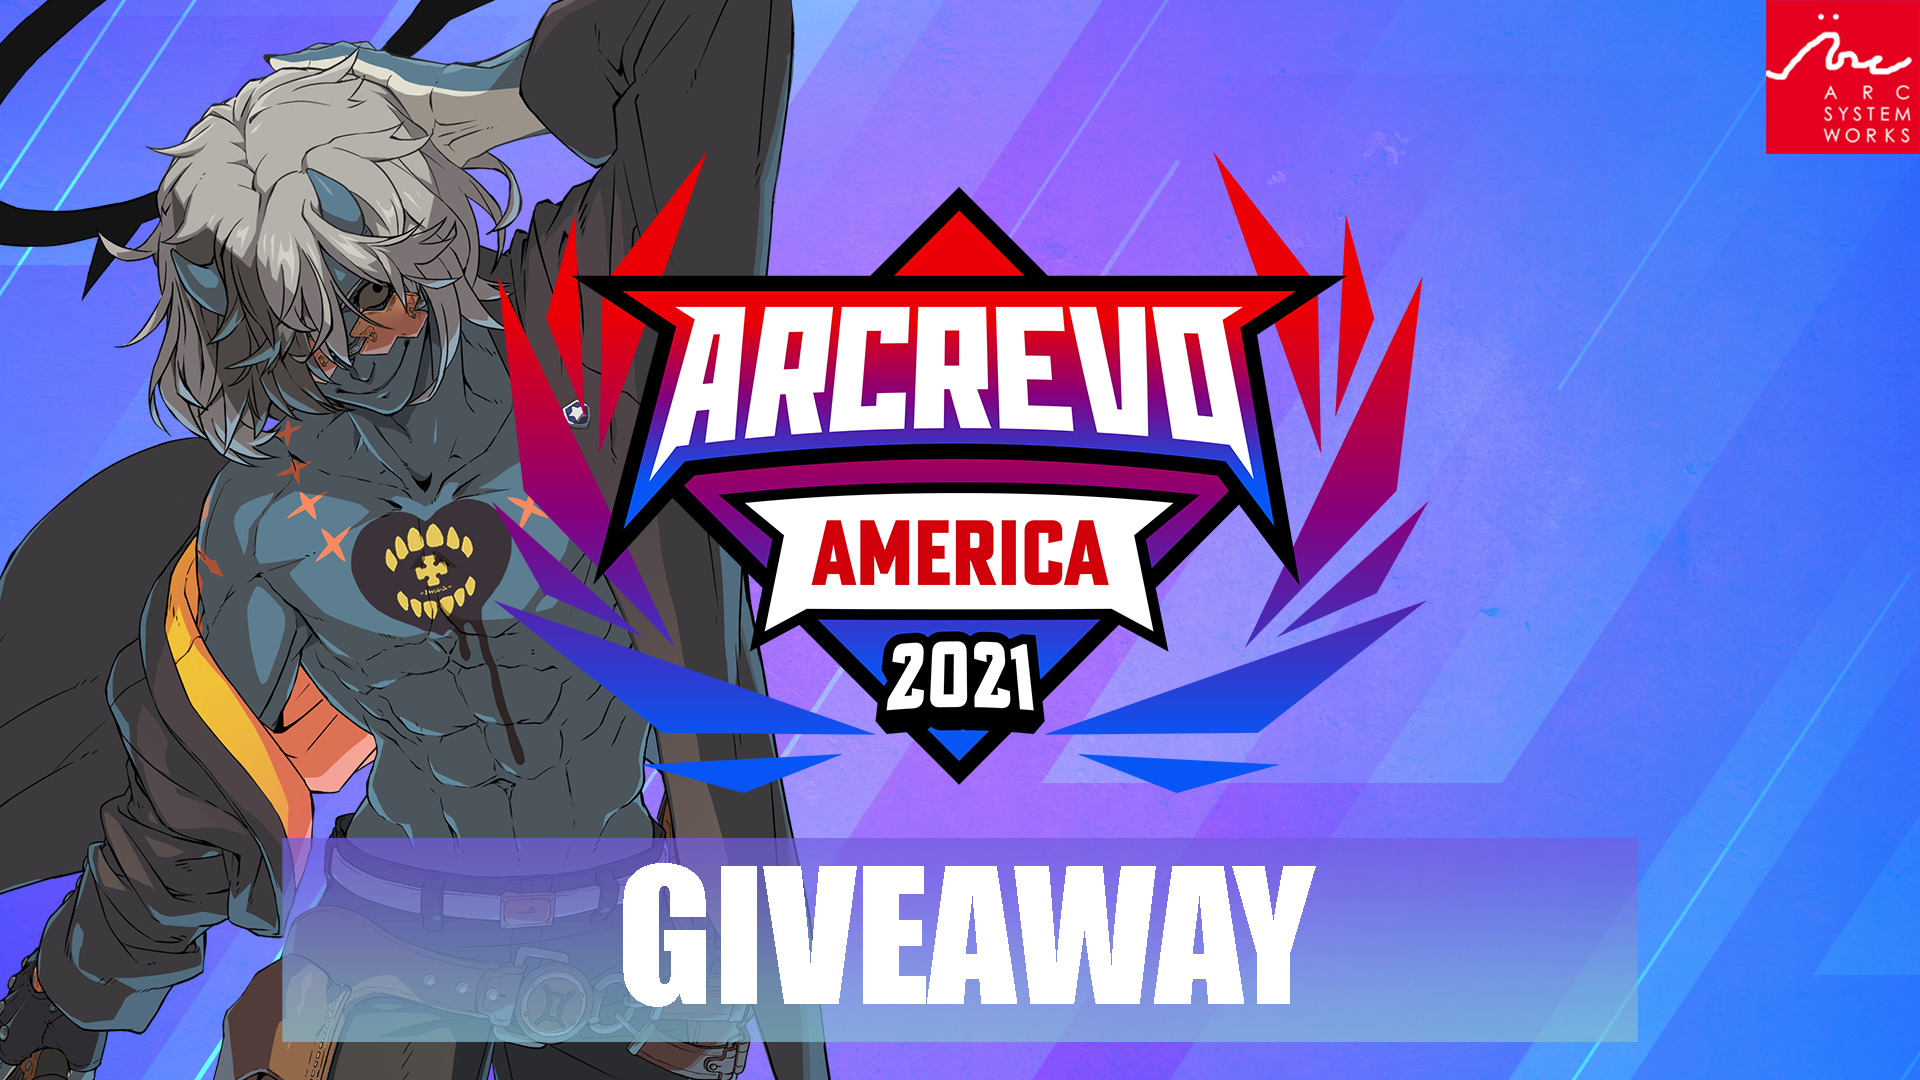 ARCREVO America 2021 Giveaway!